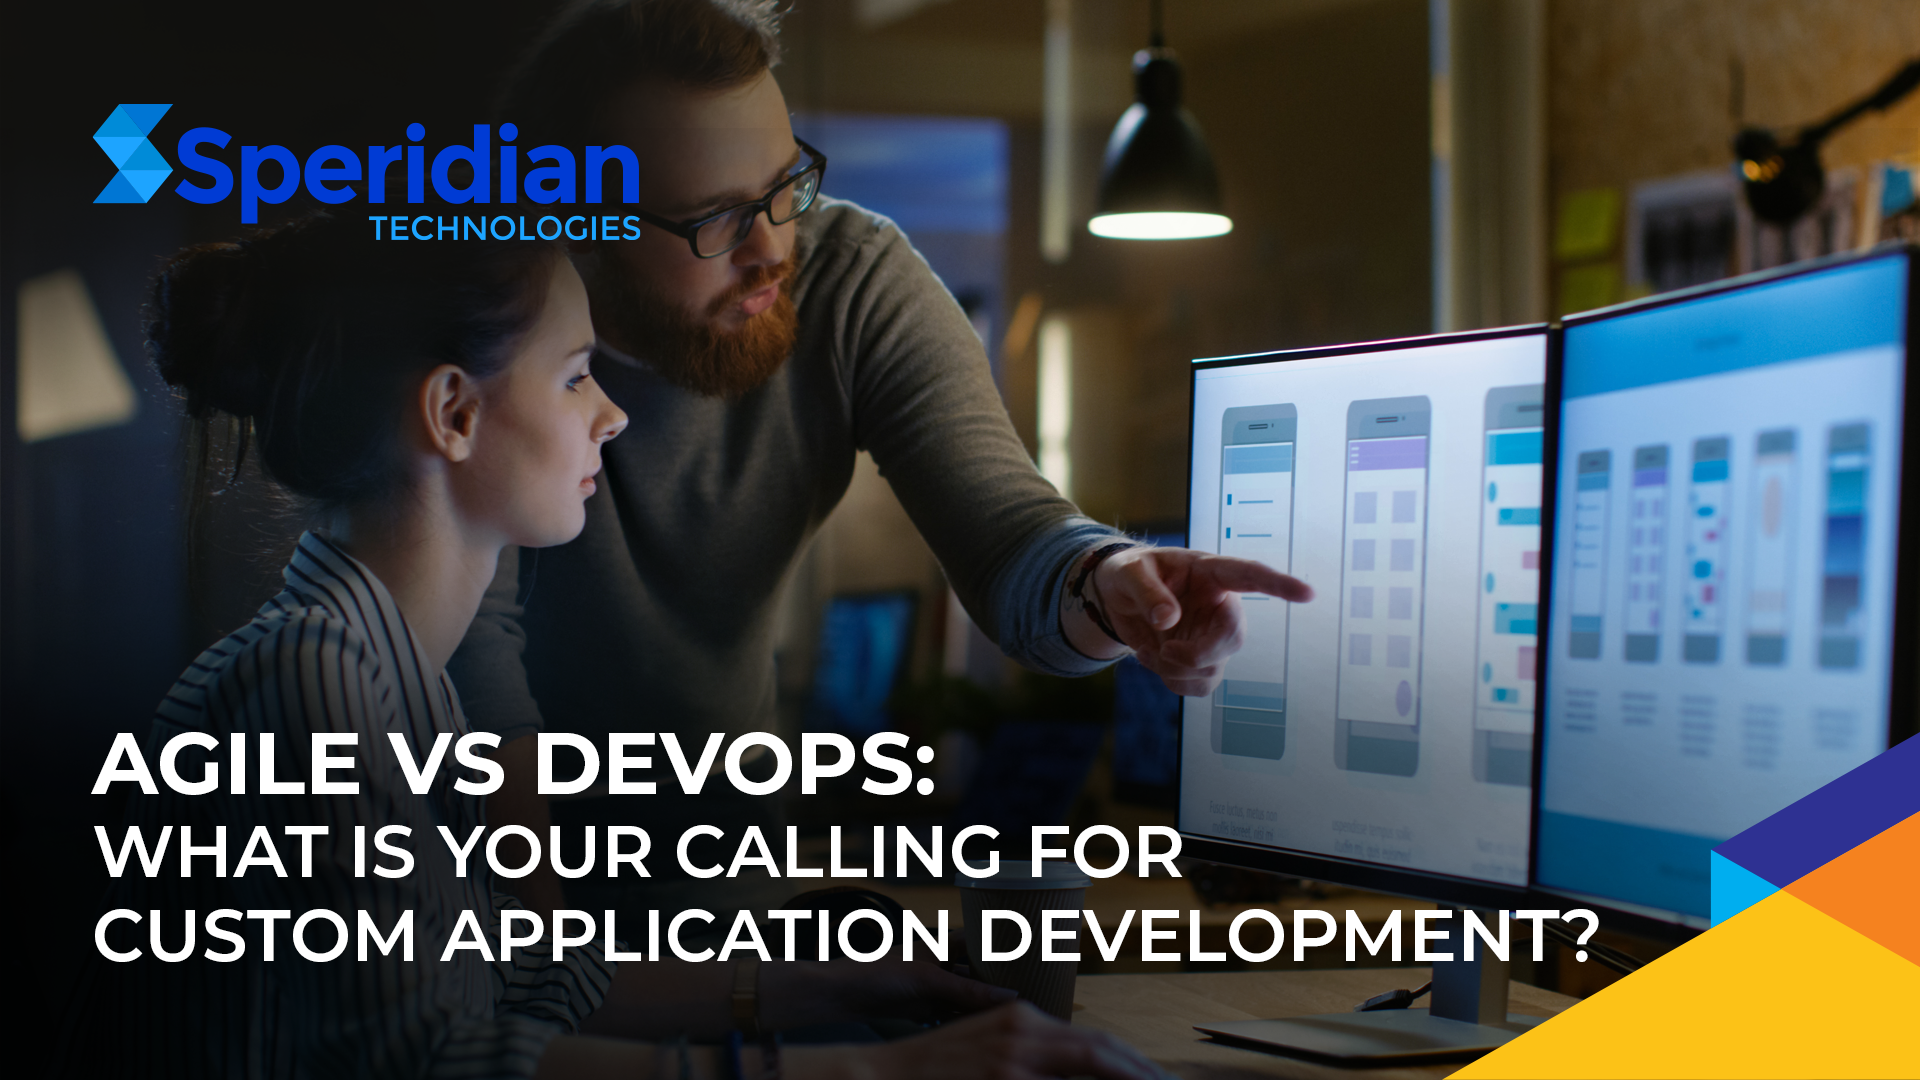 Agile vs DevOps: What is Your Calling For Custom Application Development?